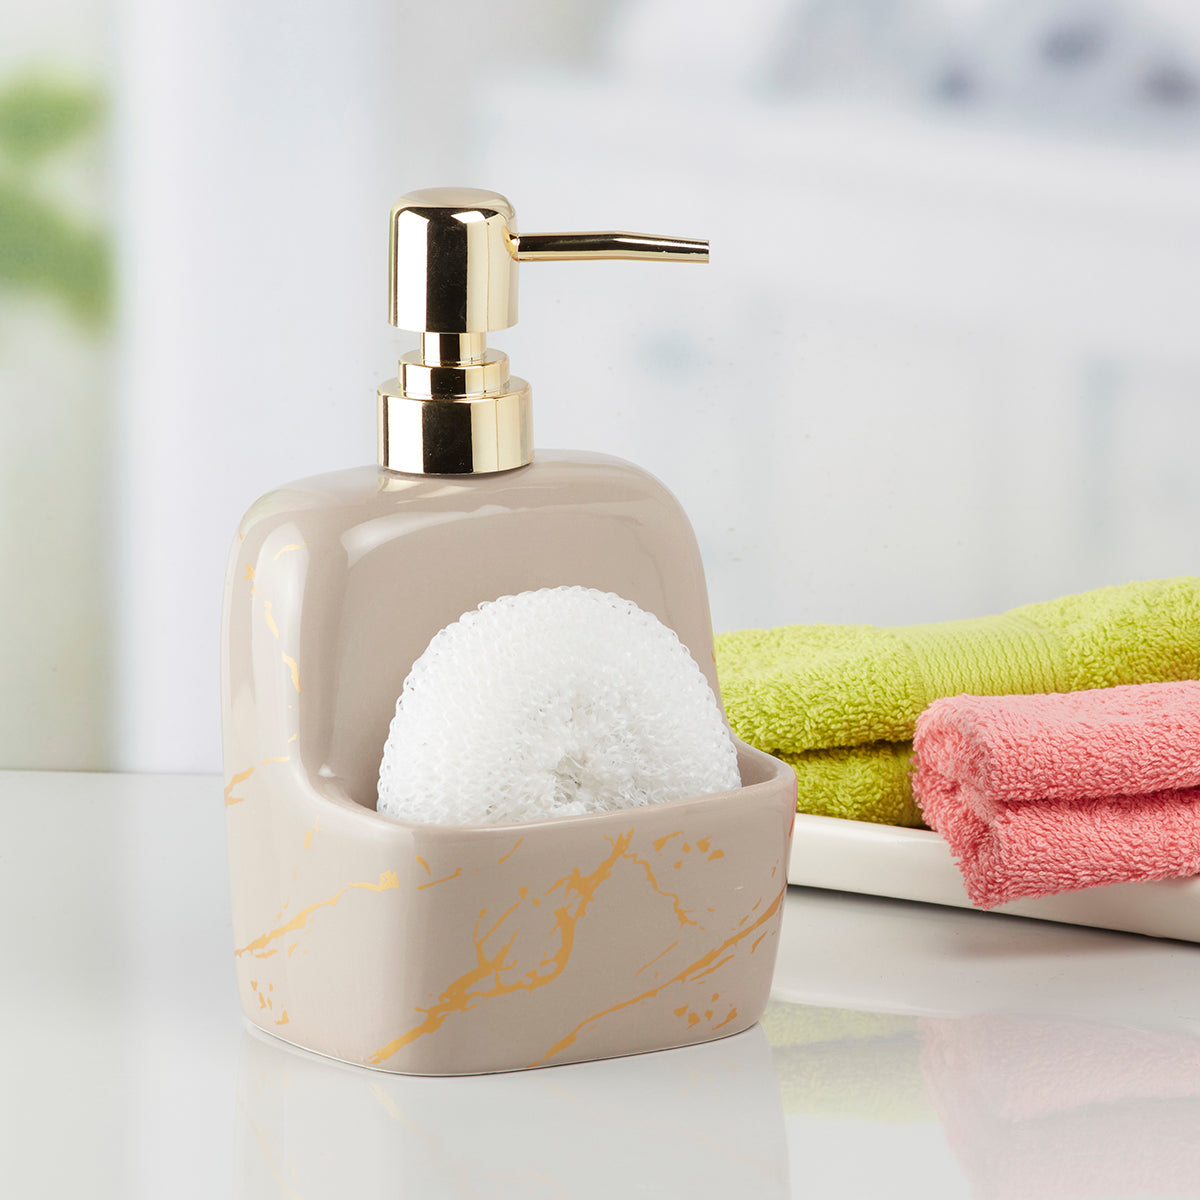 Ceramic Soap Dispenser handwash Pump for Bathroom, Set of 1, Black/Gold (10207)